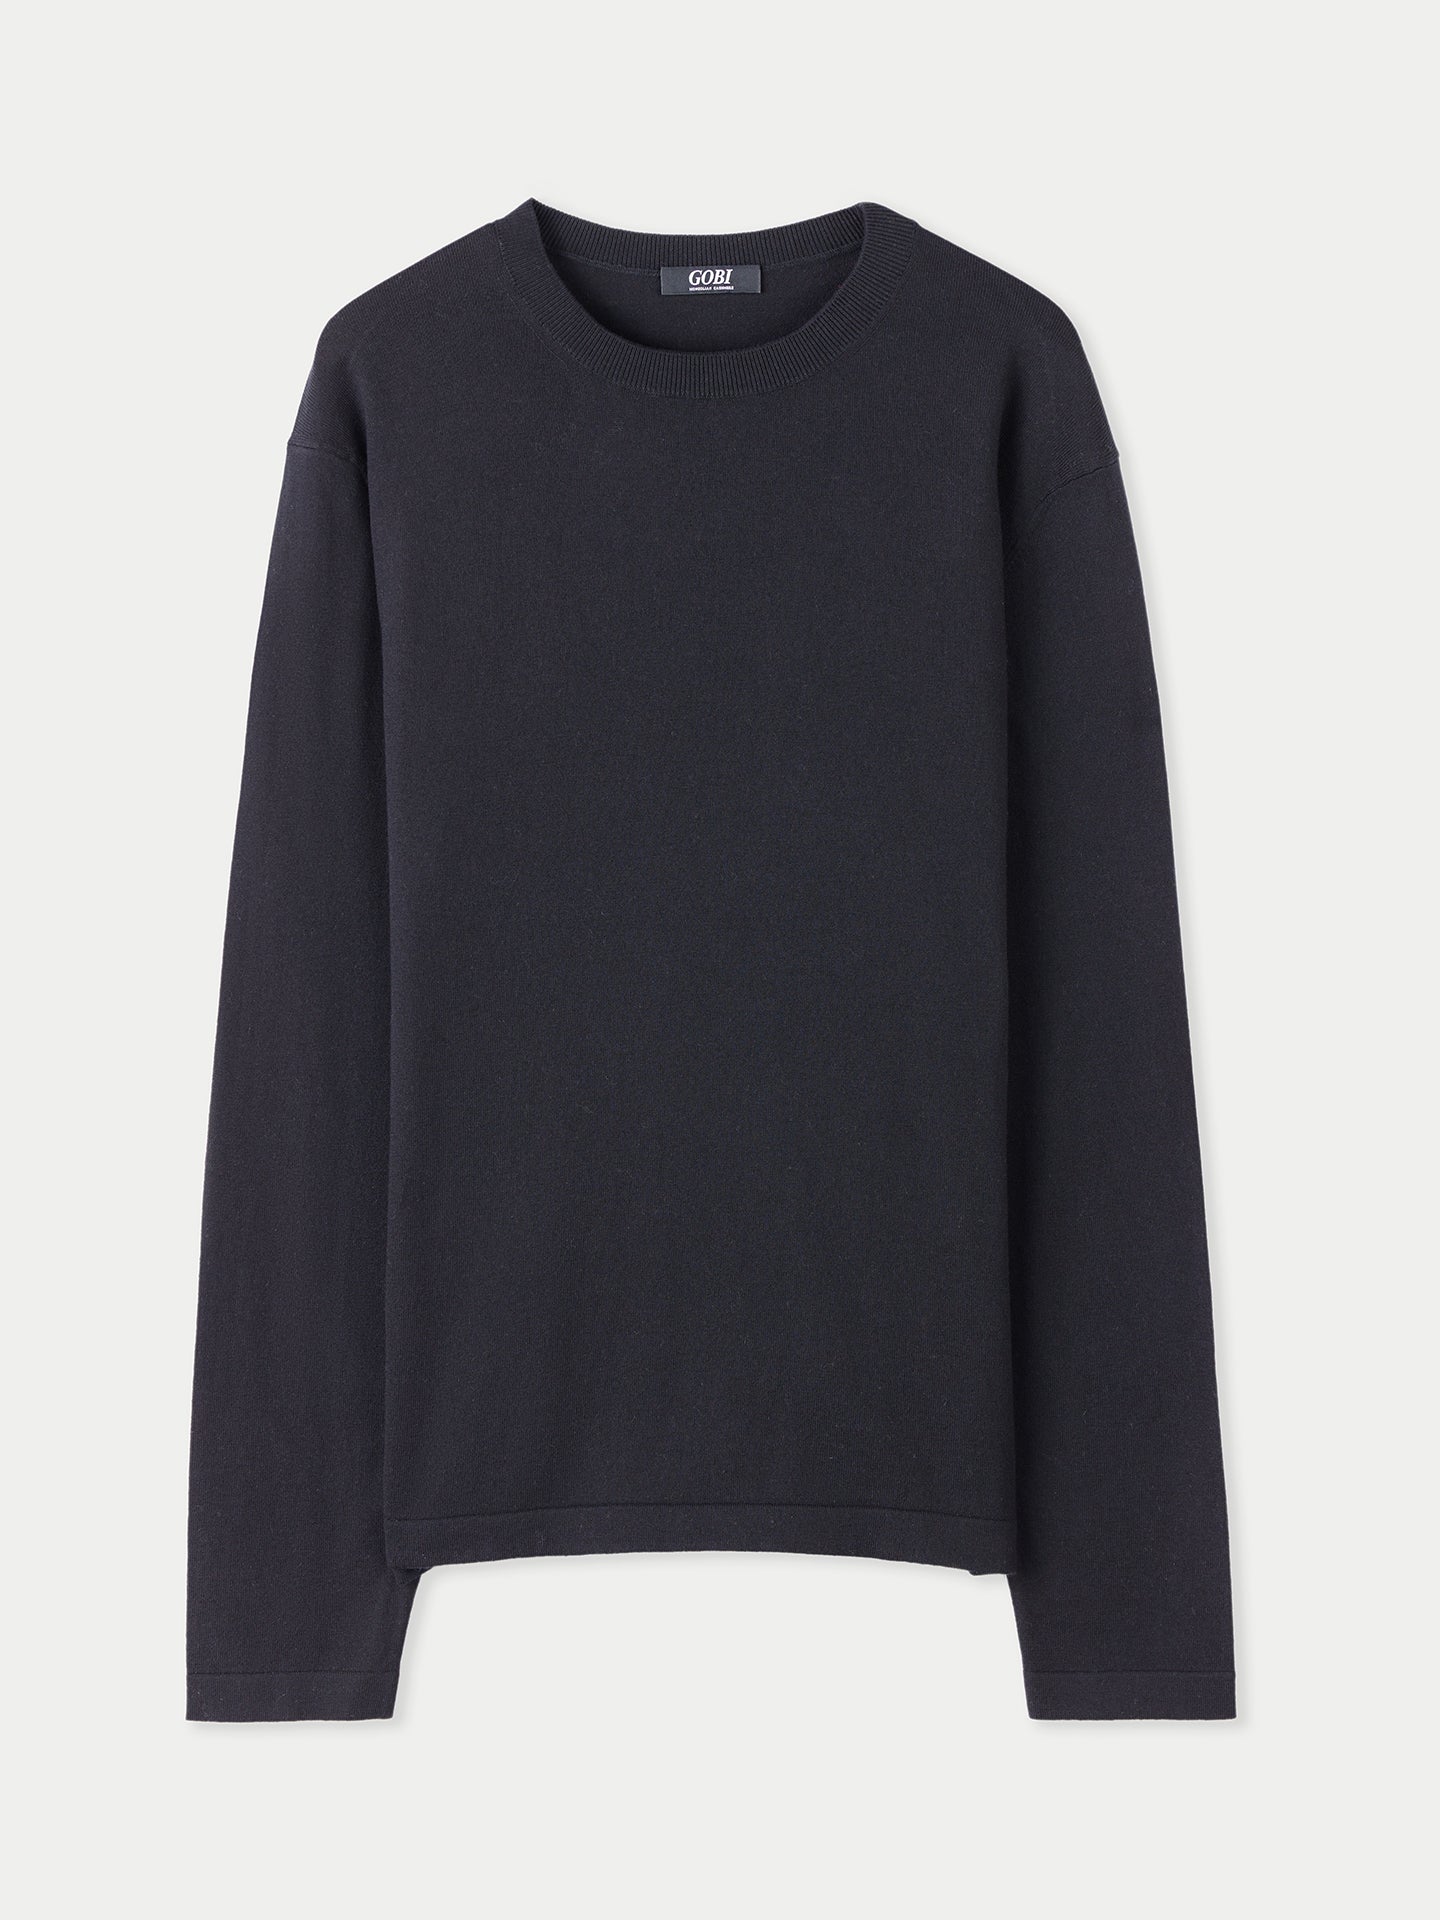 Men's Crewneck Cotton Silk Cashmere Blend Sweater Black - Gobi Cashmere